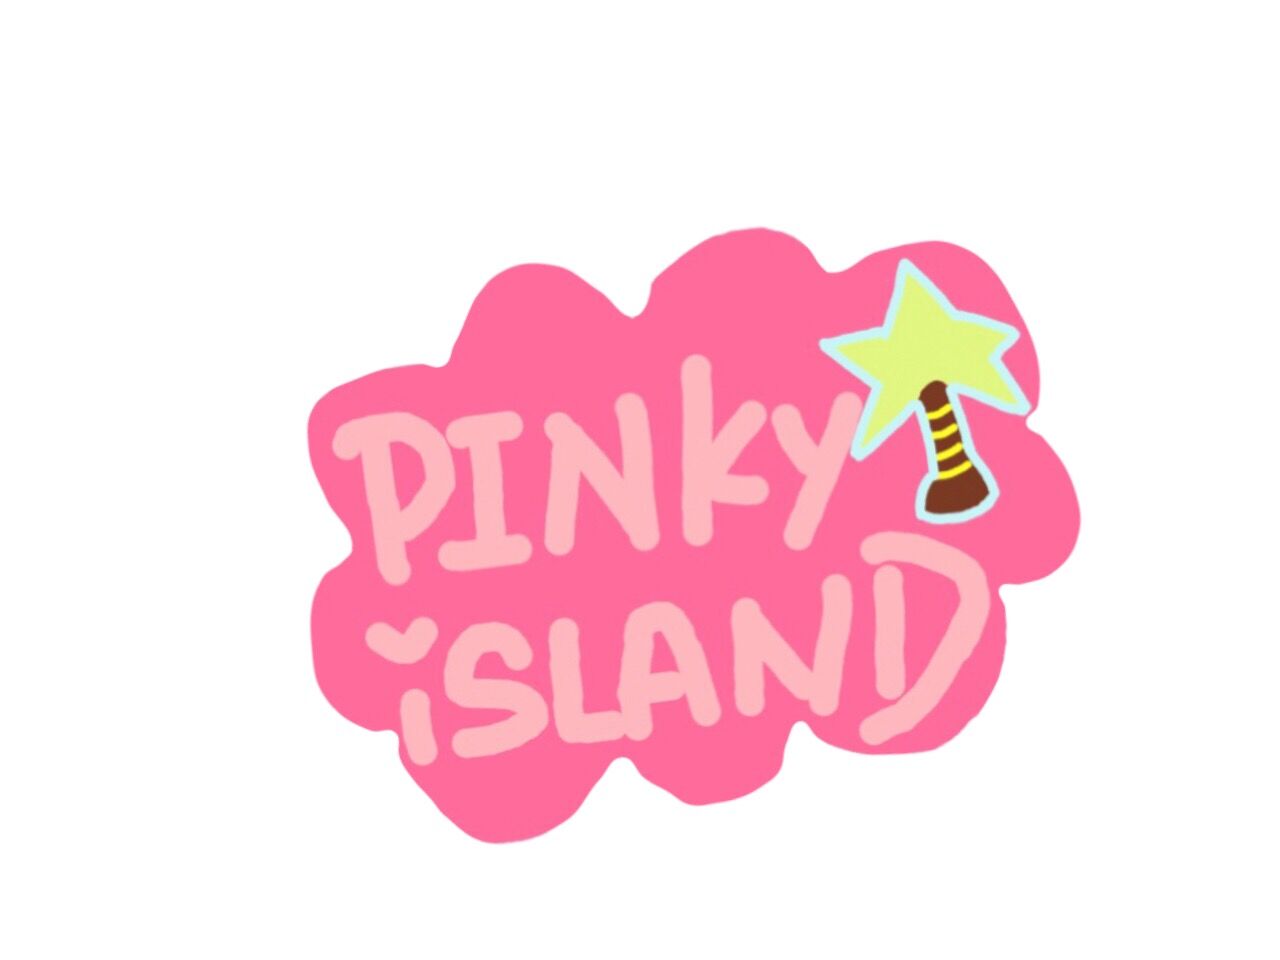 PINKY ISLAND